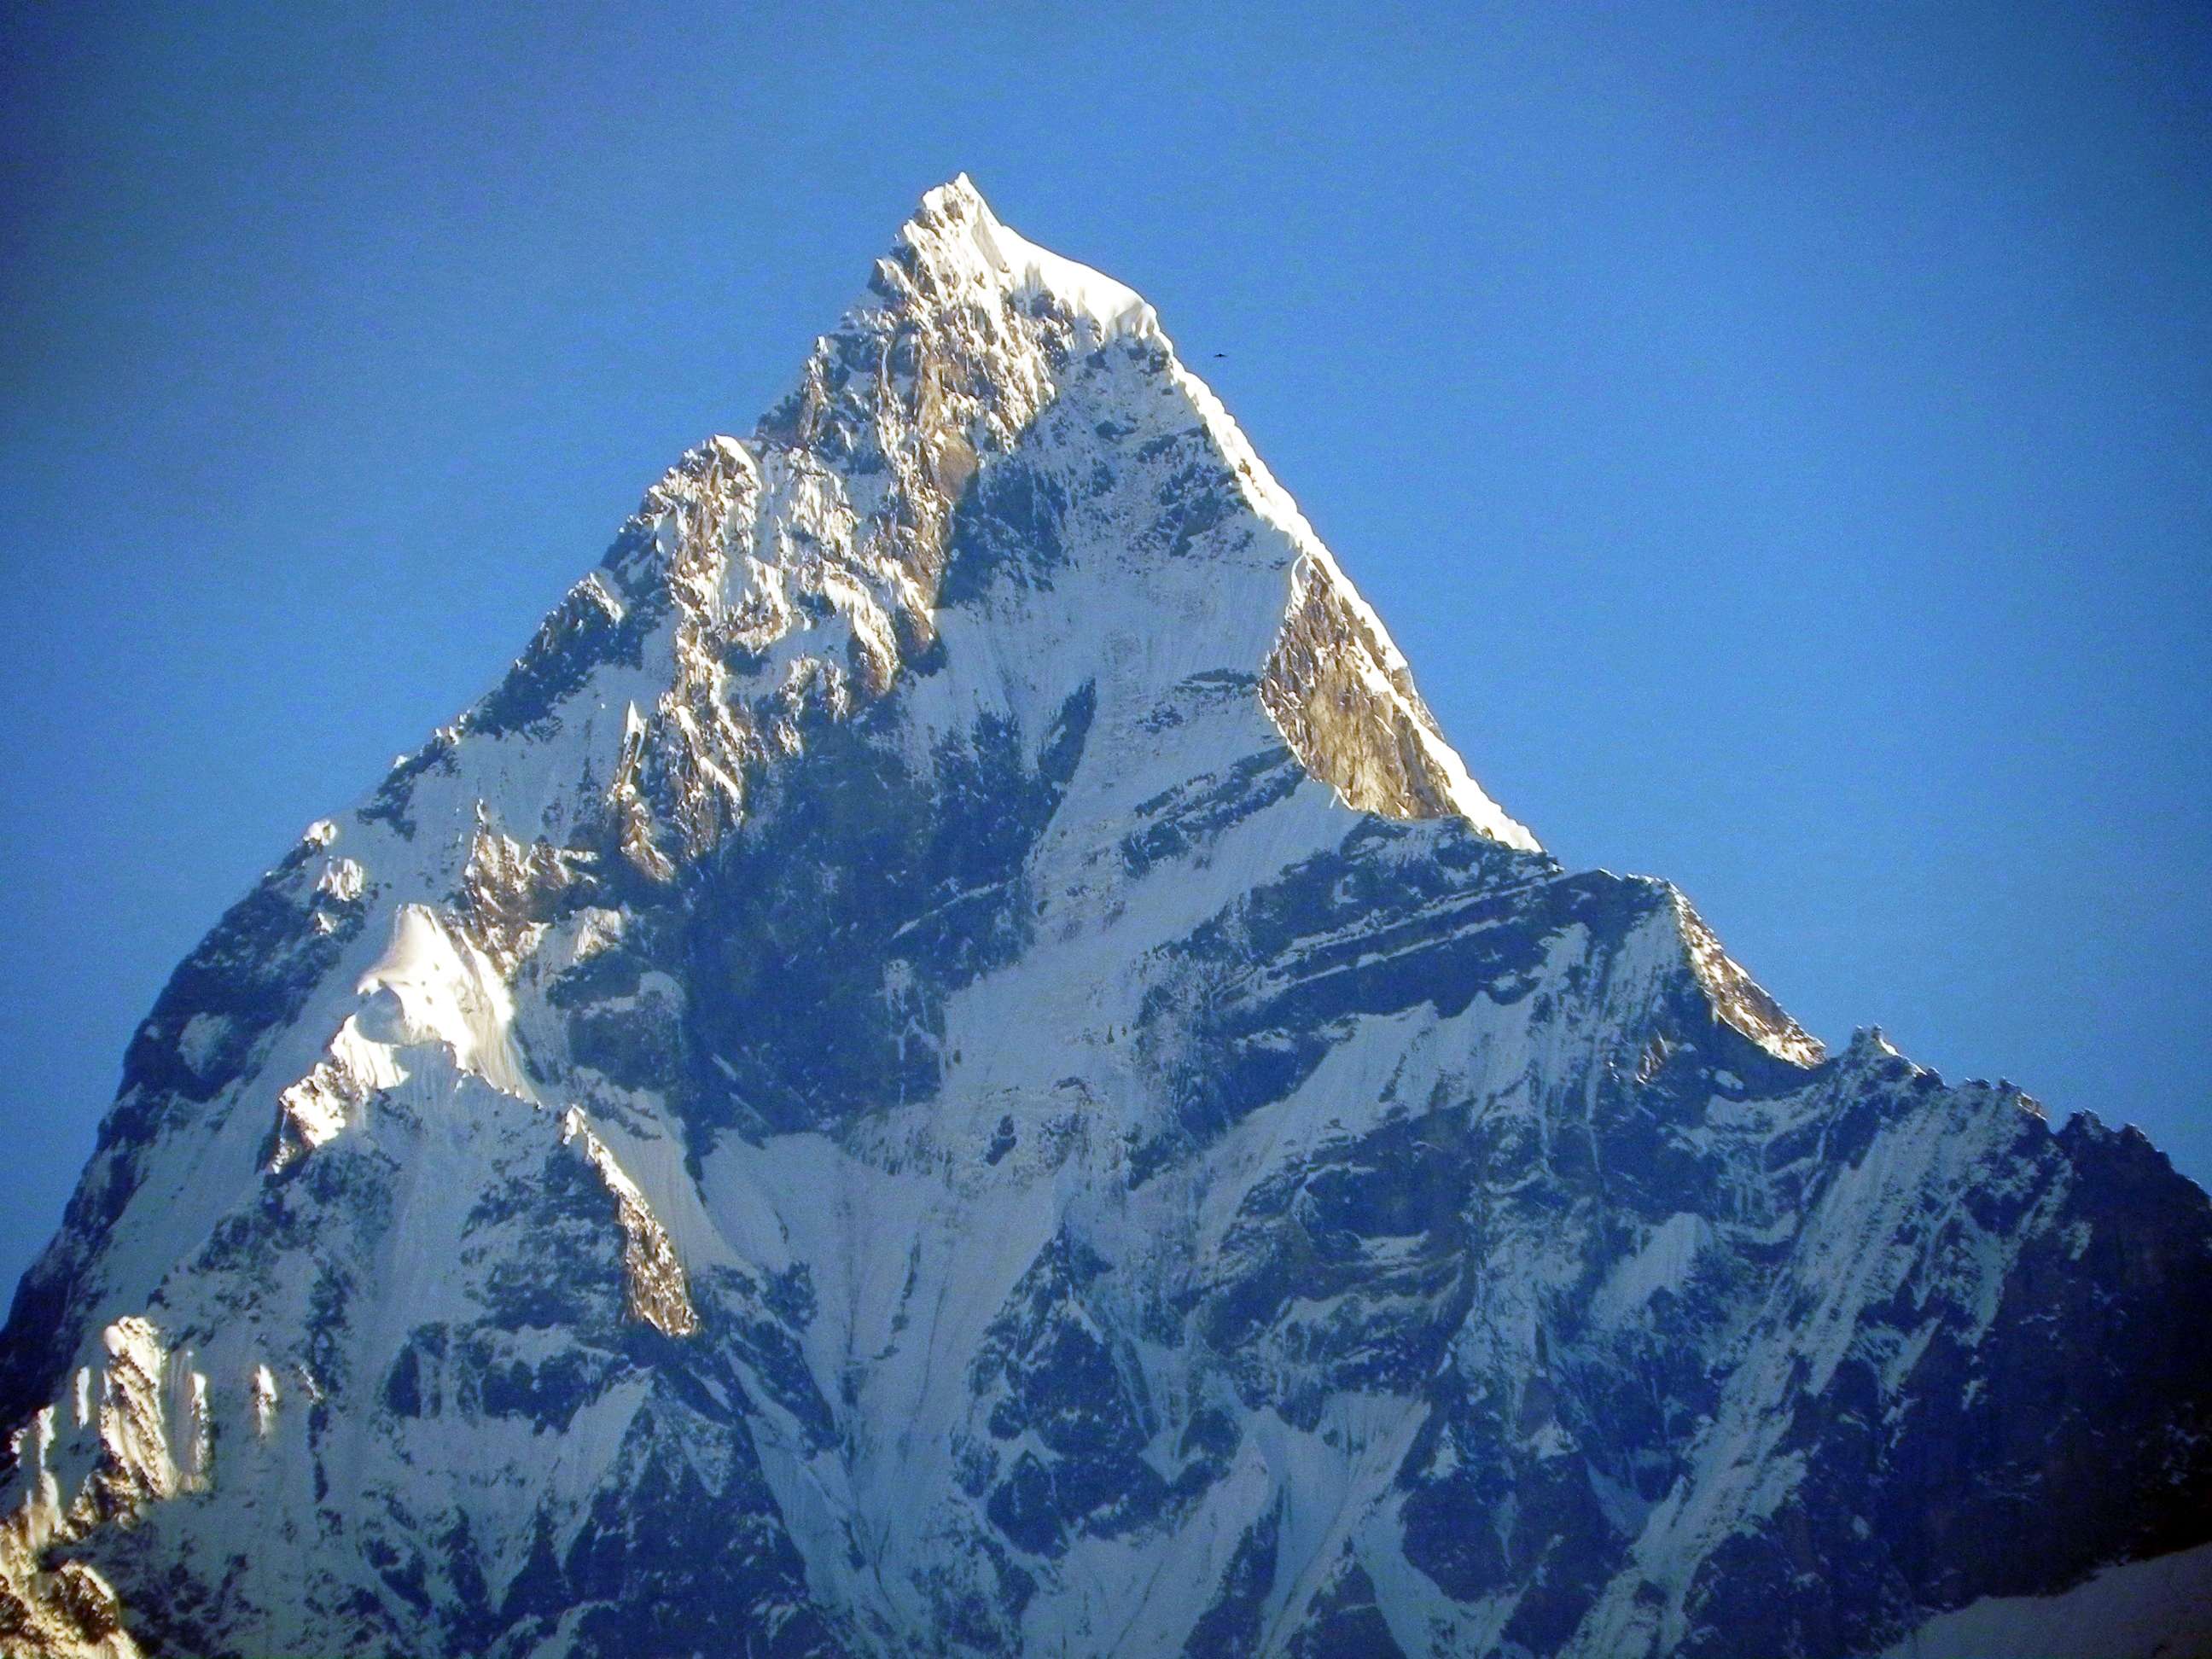 Annapurna seen from Pokhara